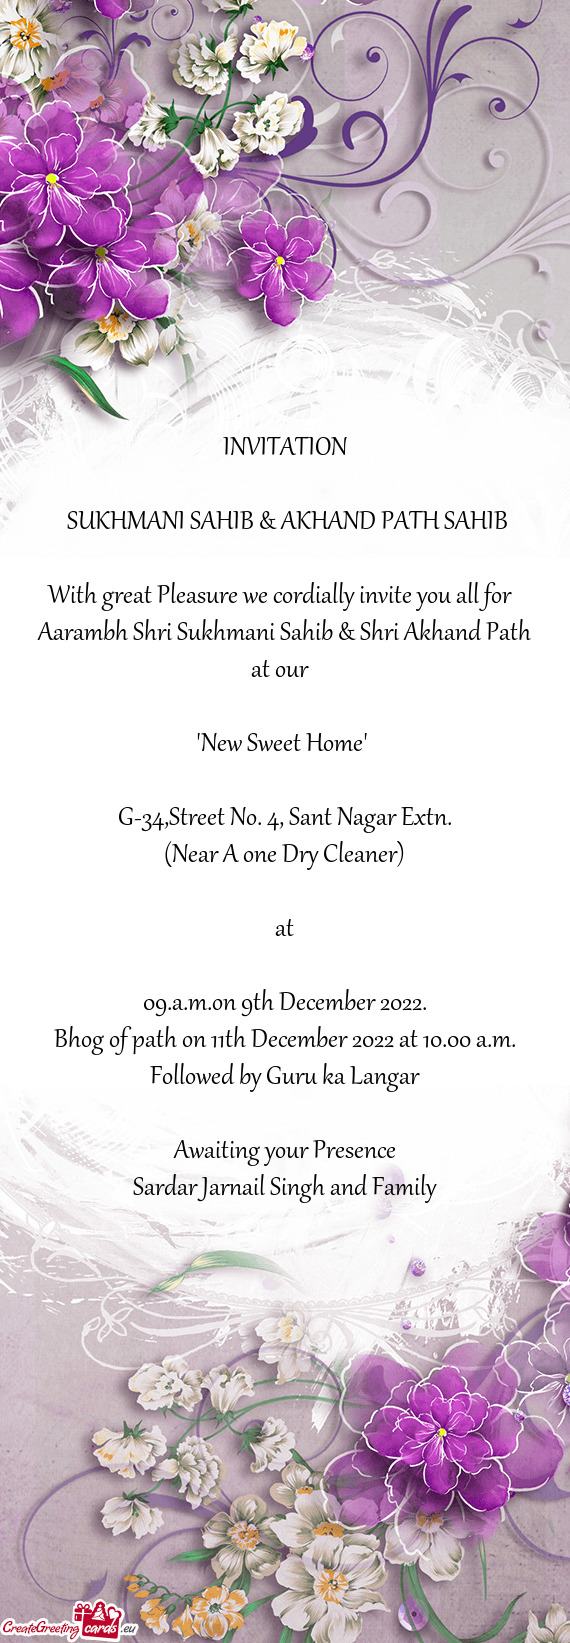 Aarambh Shri Sukhmani Sahib & Shri Akhand Path at our